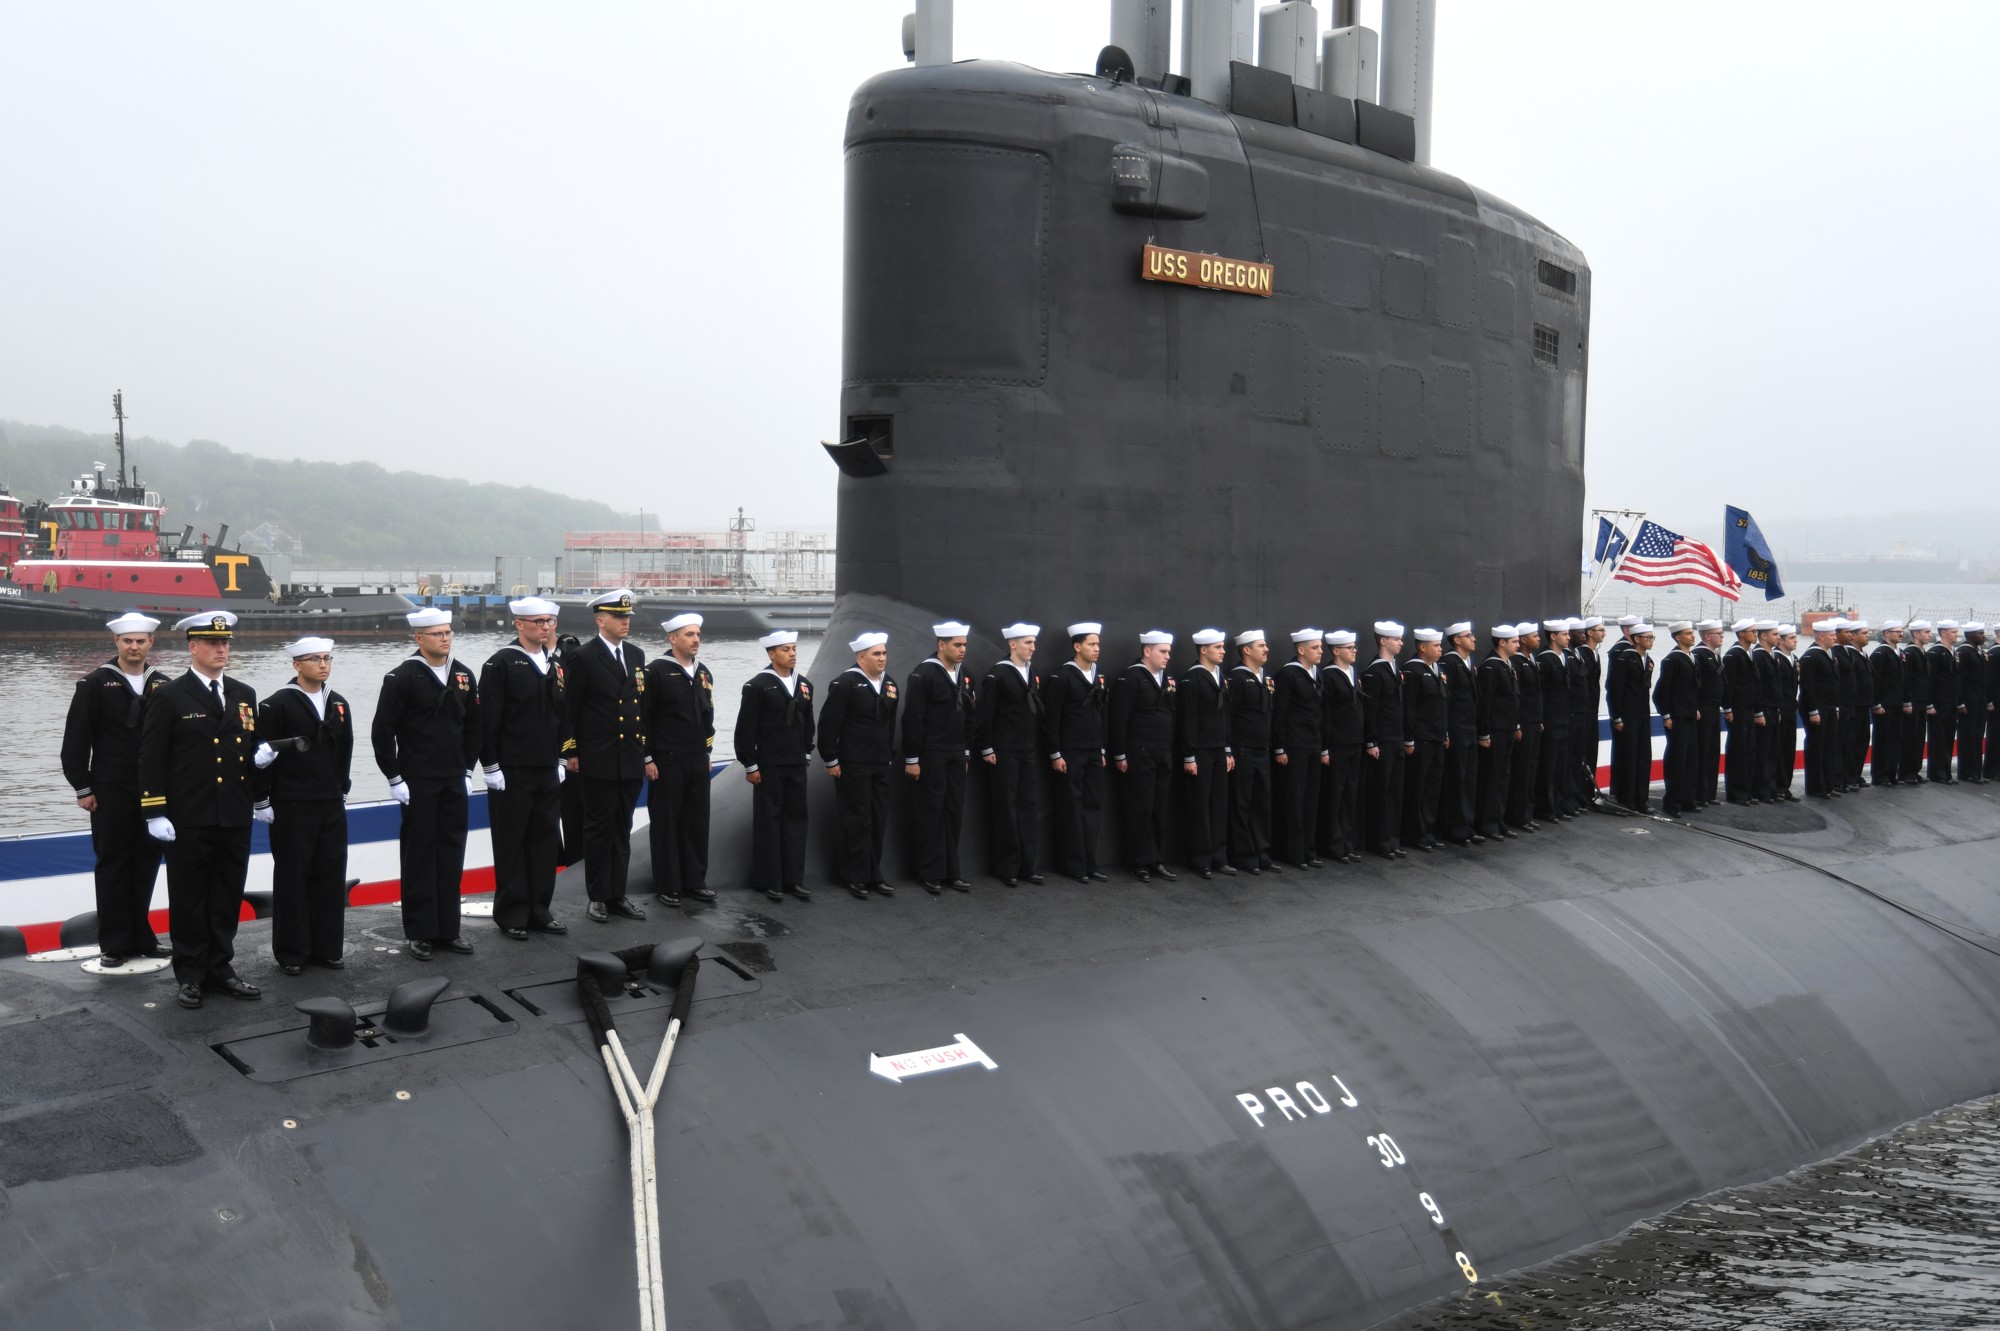 ssn-793 uss oregon virginia class attack submarine block iv us navy commissioning ceremony groton connecticut 08